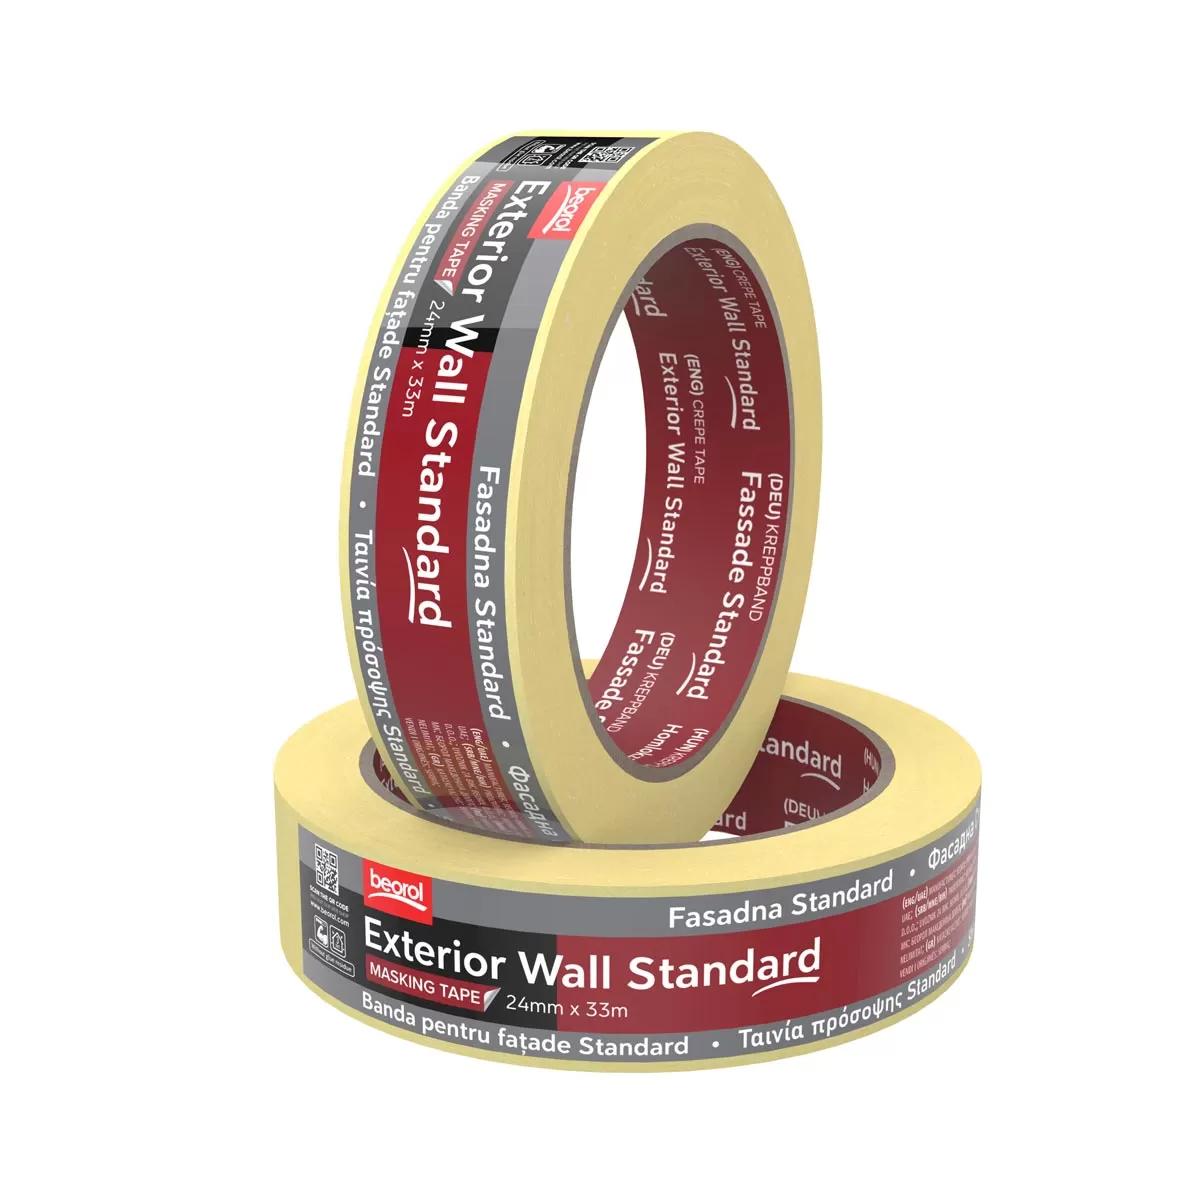 Masking tape Exterior Wall Standard 24mm x 33m 